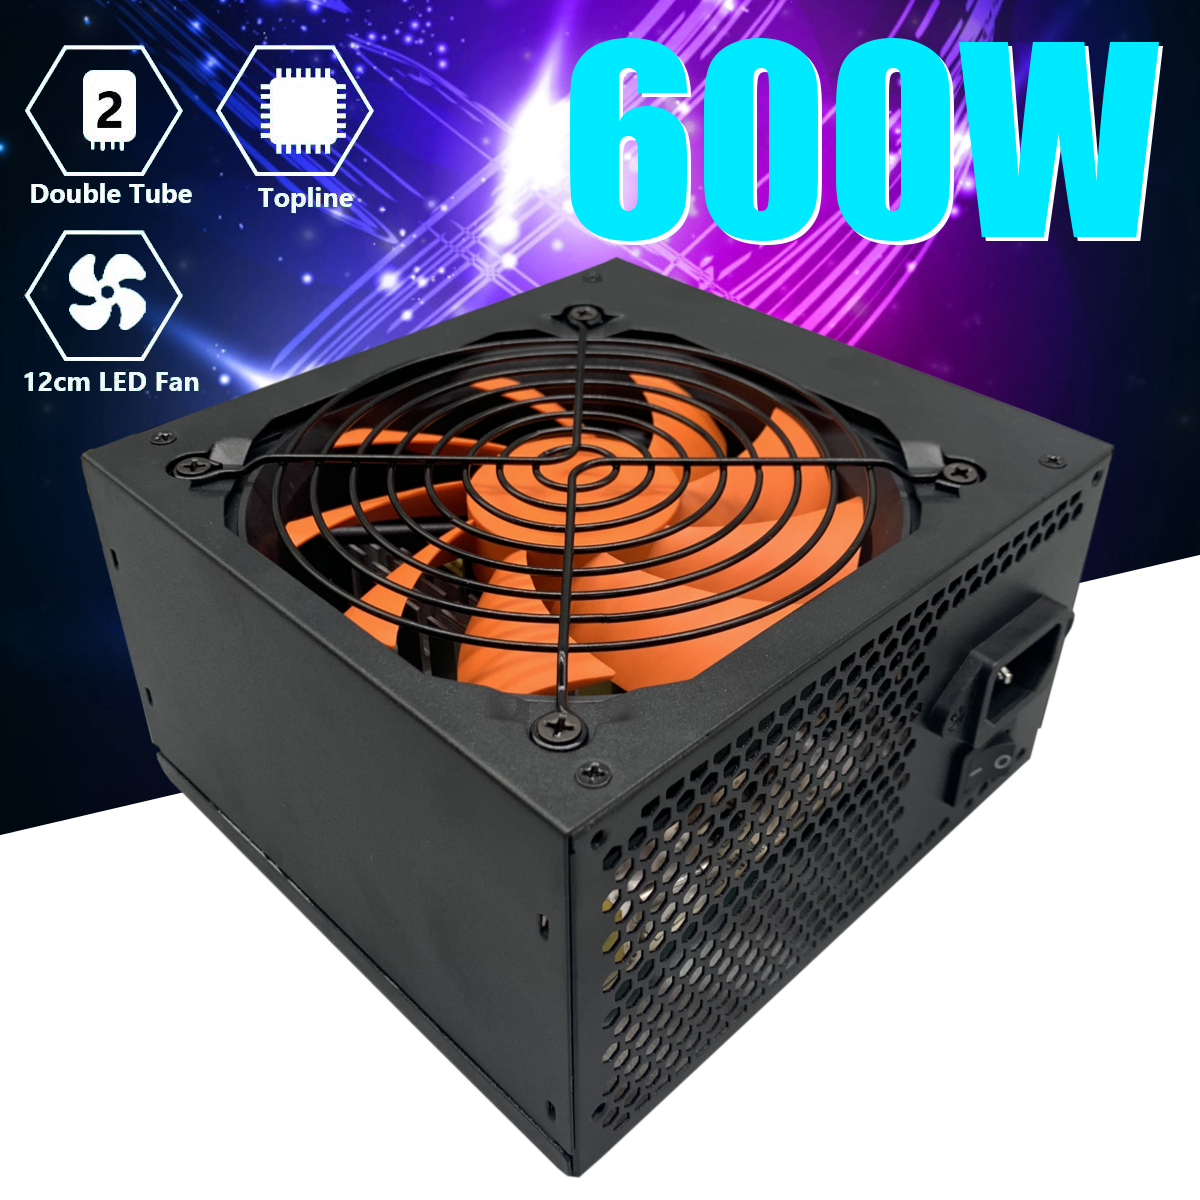 450W-Gaming-PC-Desktop-Computer-ATX-12V-Power-Supply-24-Pin-PCI-120mm-LED-Fan-1709950-2